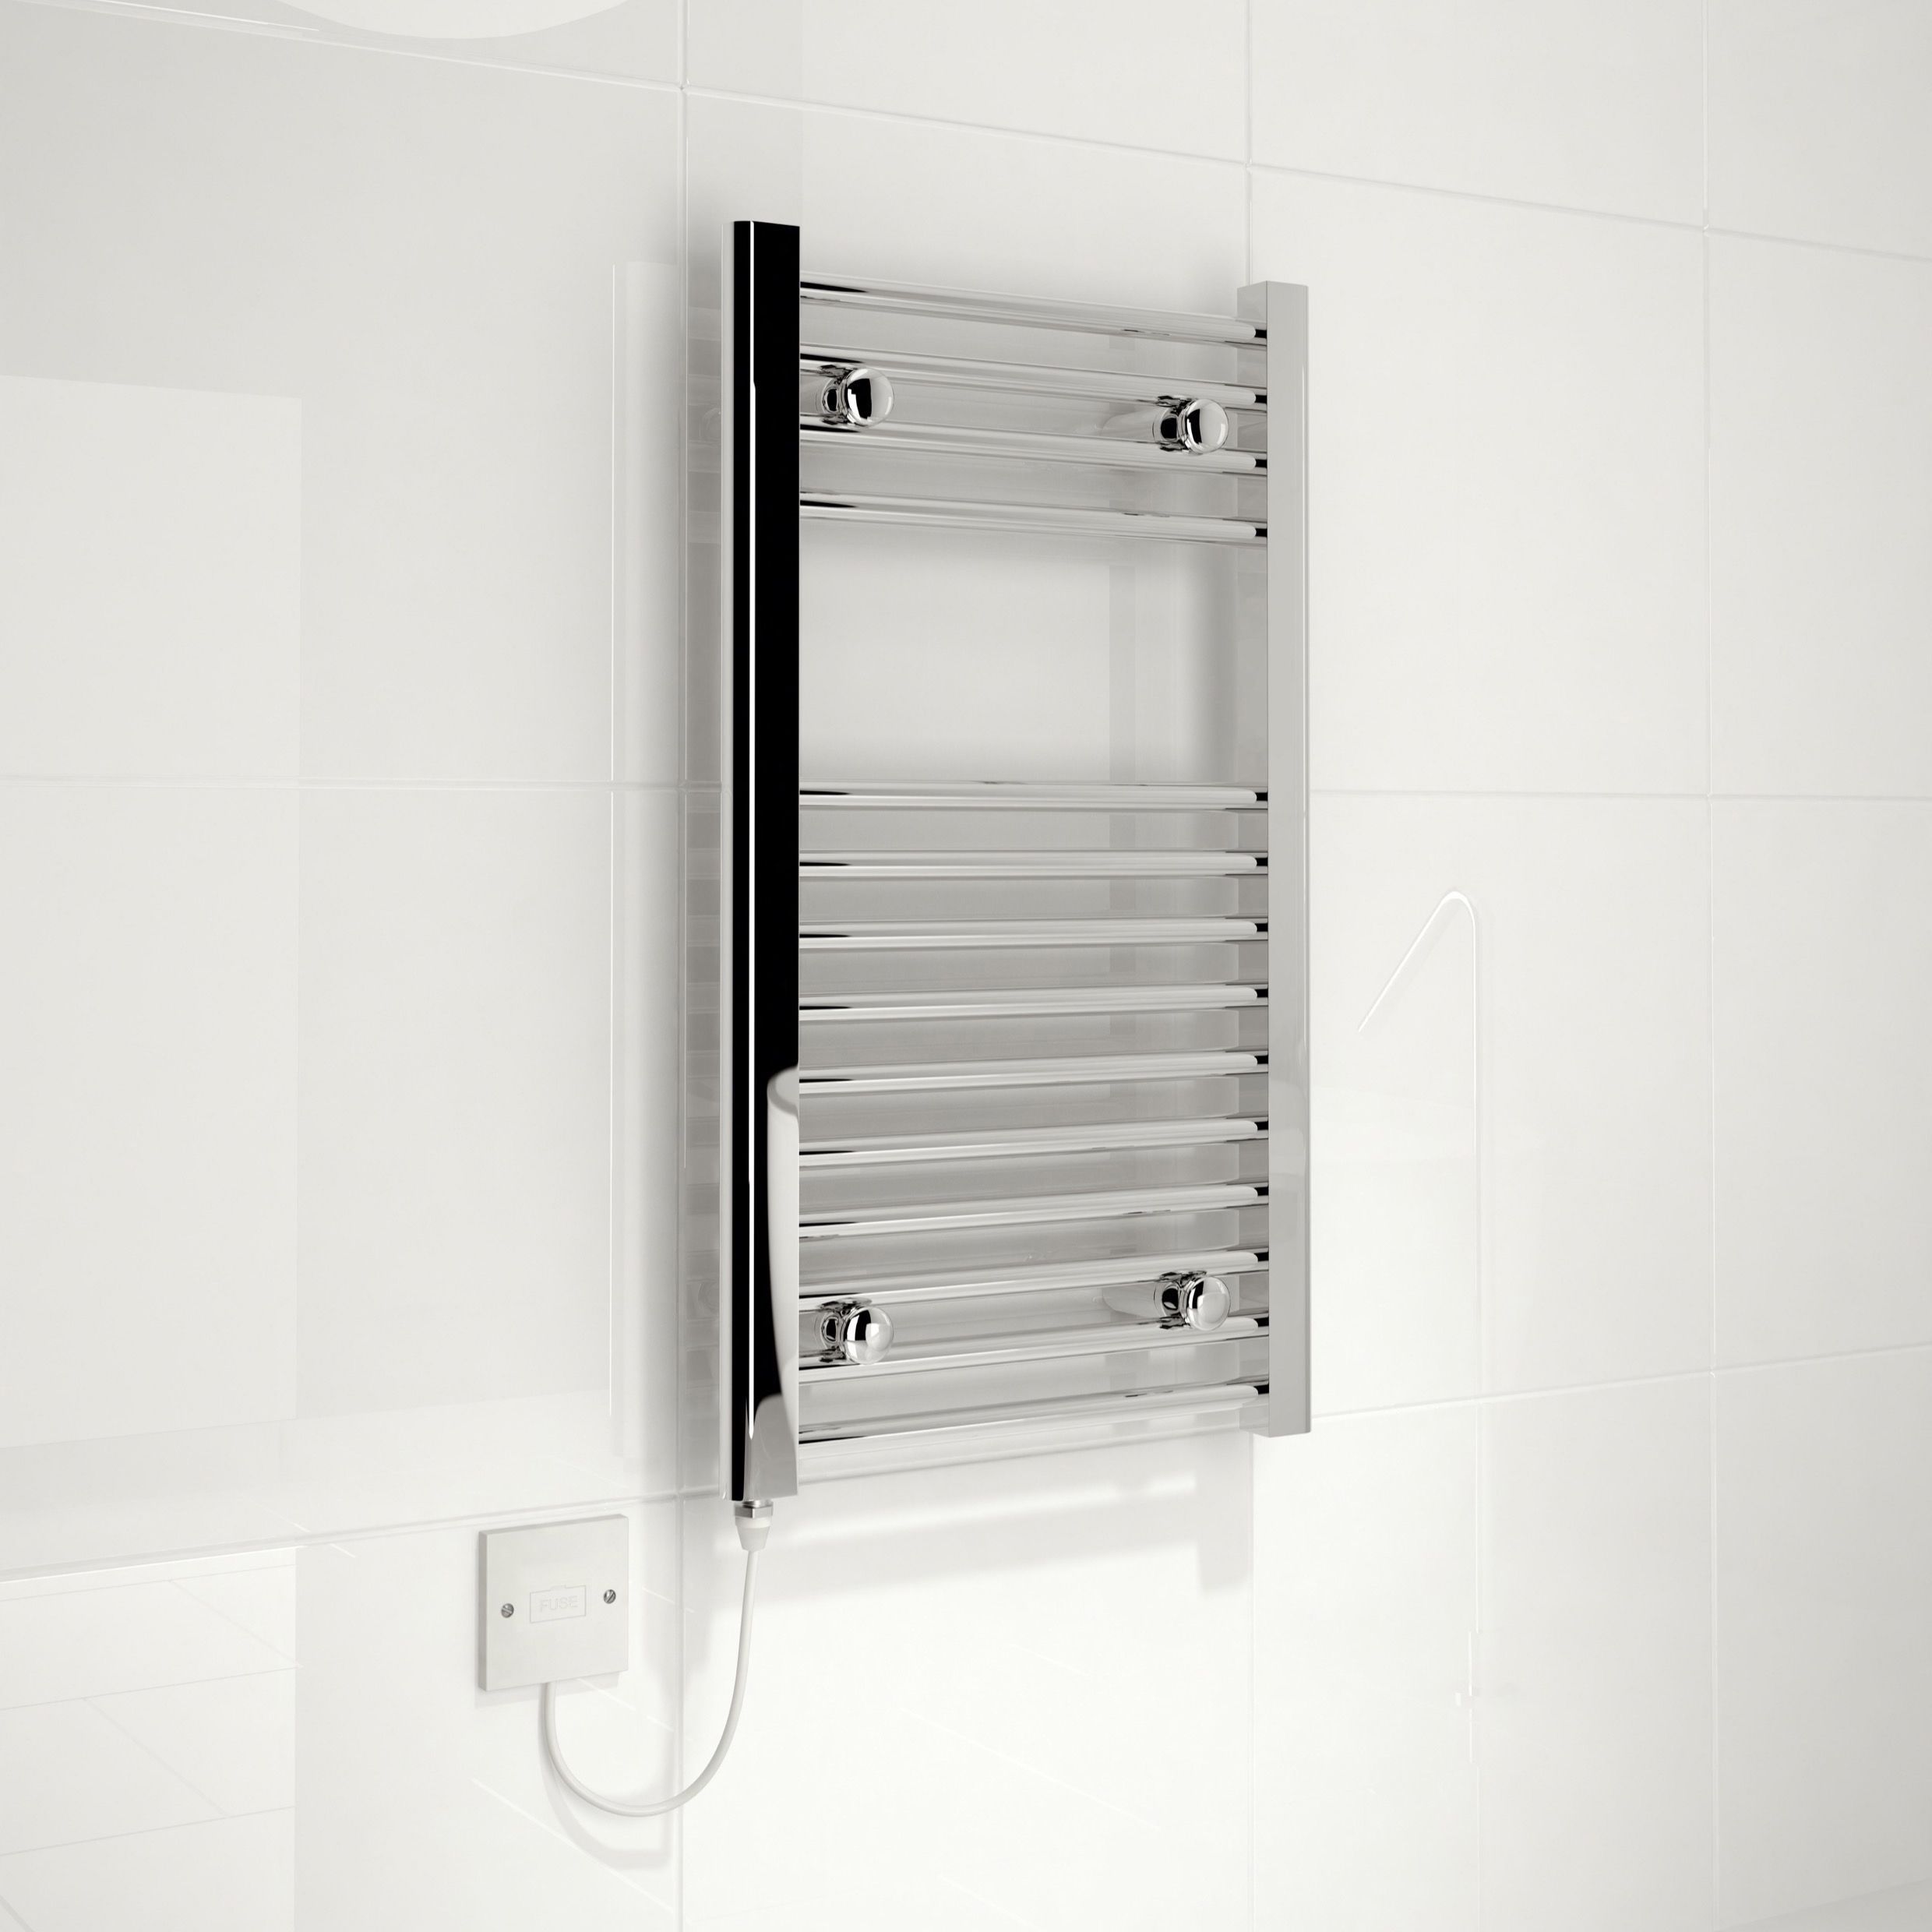 Kudox Silver Chrome effect Electric Towel warmer (W)400mm x (H)700mm